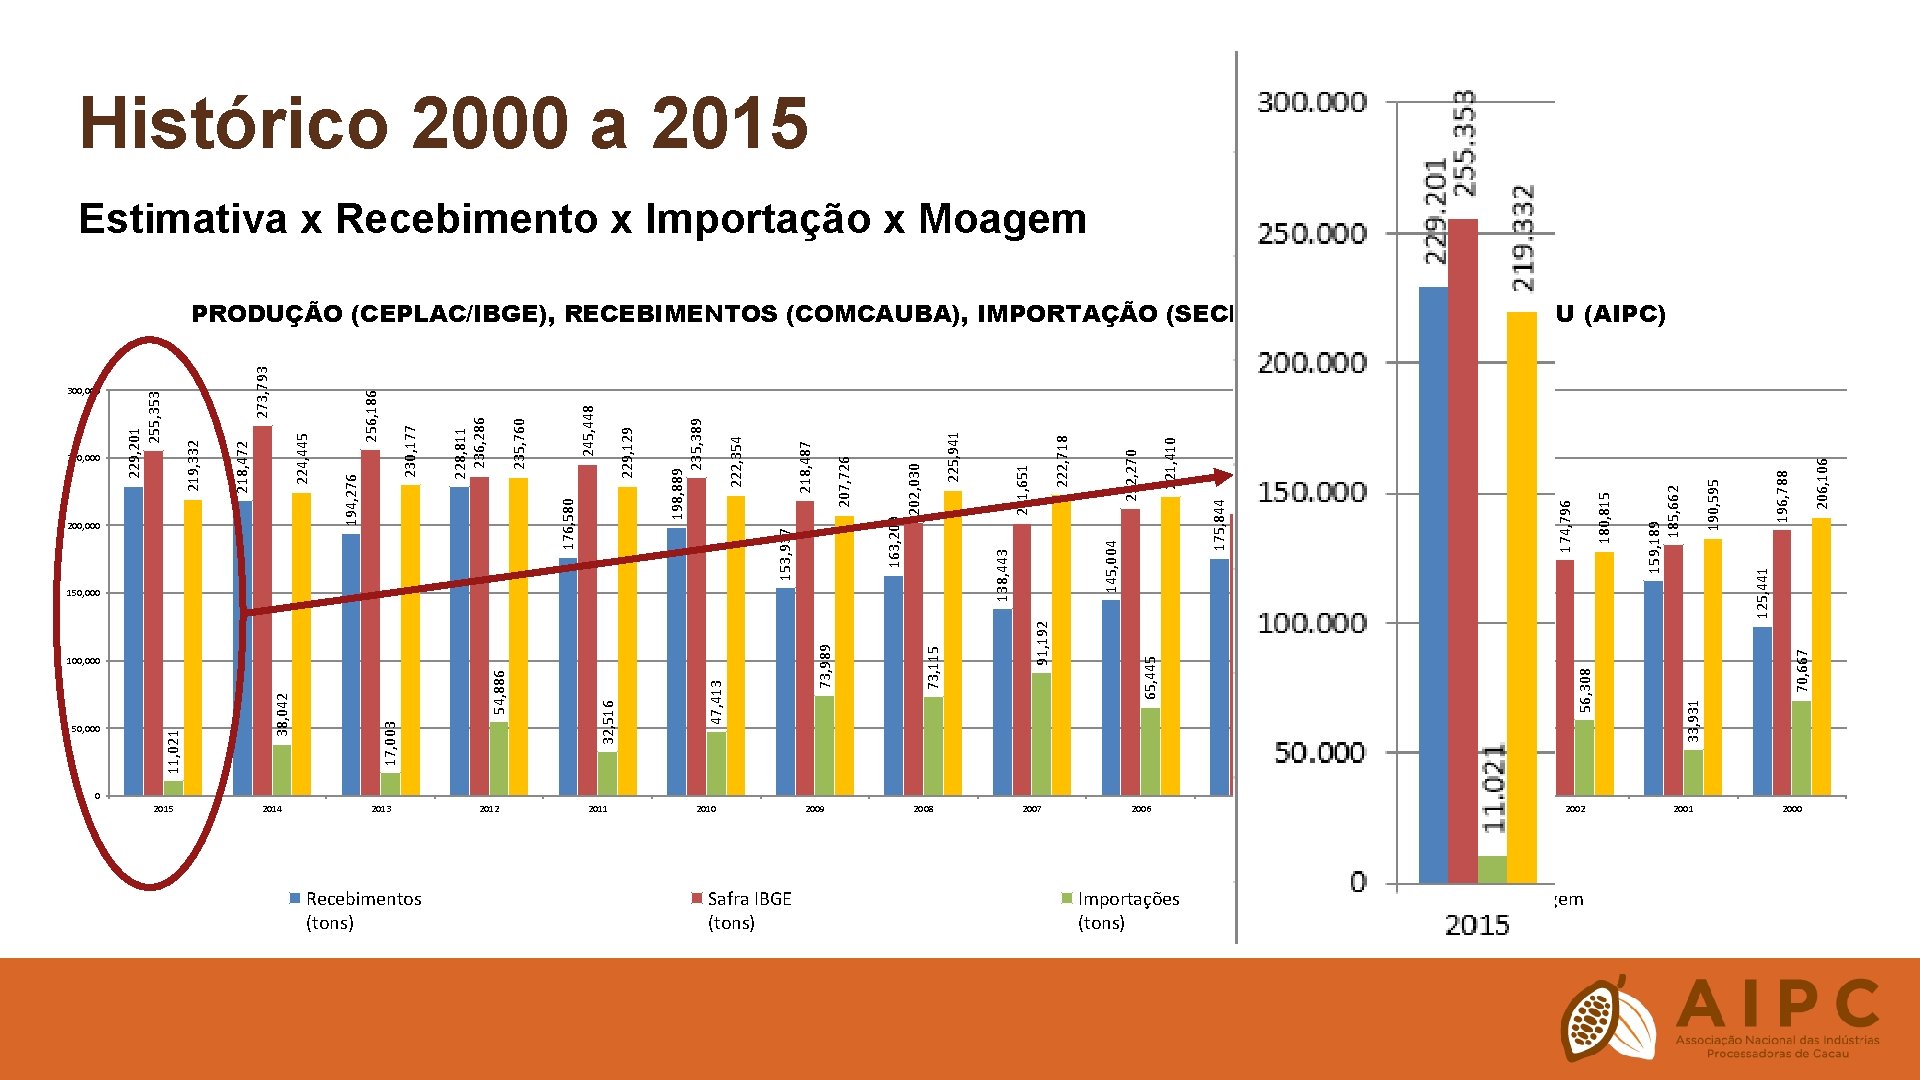 50, 000 2015 2014 2013 Recebimentos (tons) 2012 2011 100, 000 2010 Safra IBGE